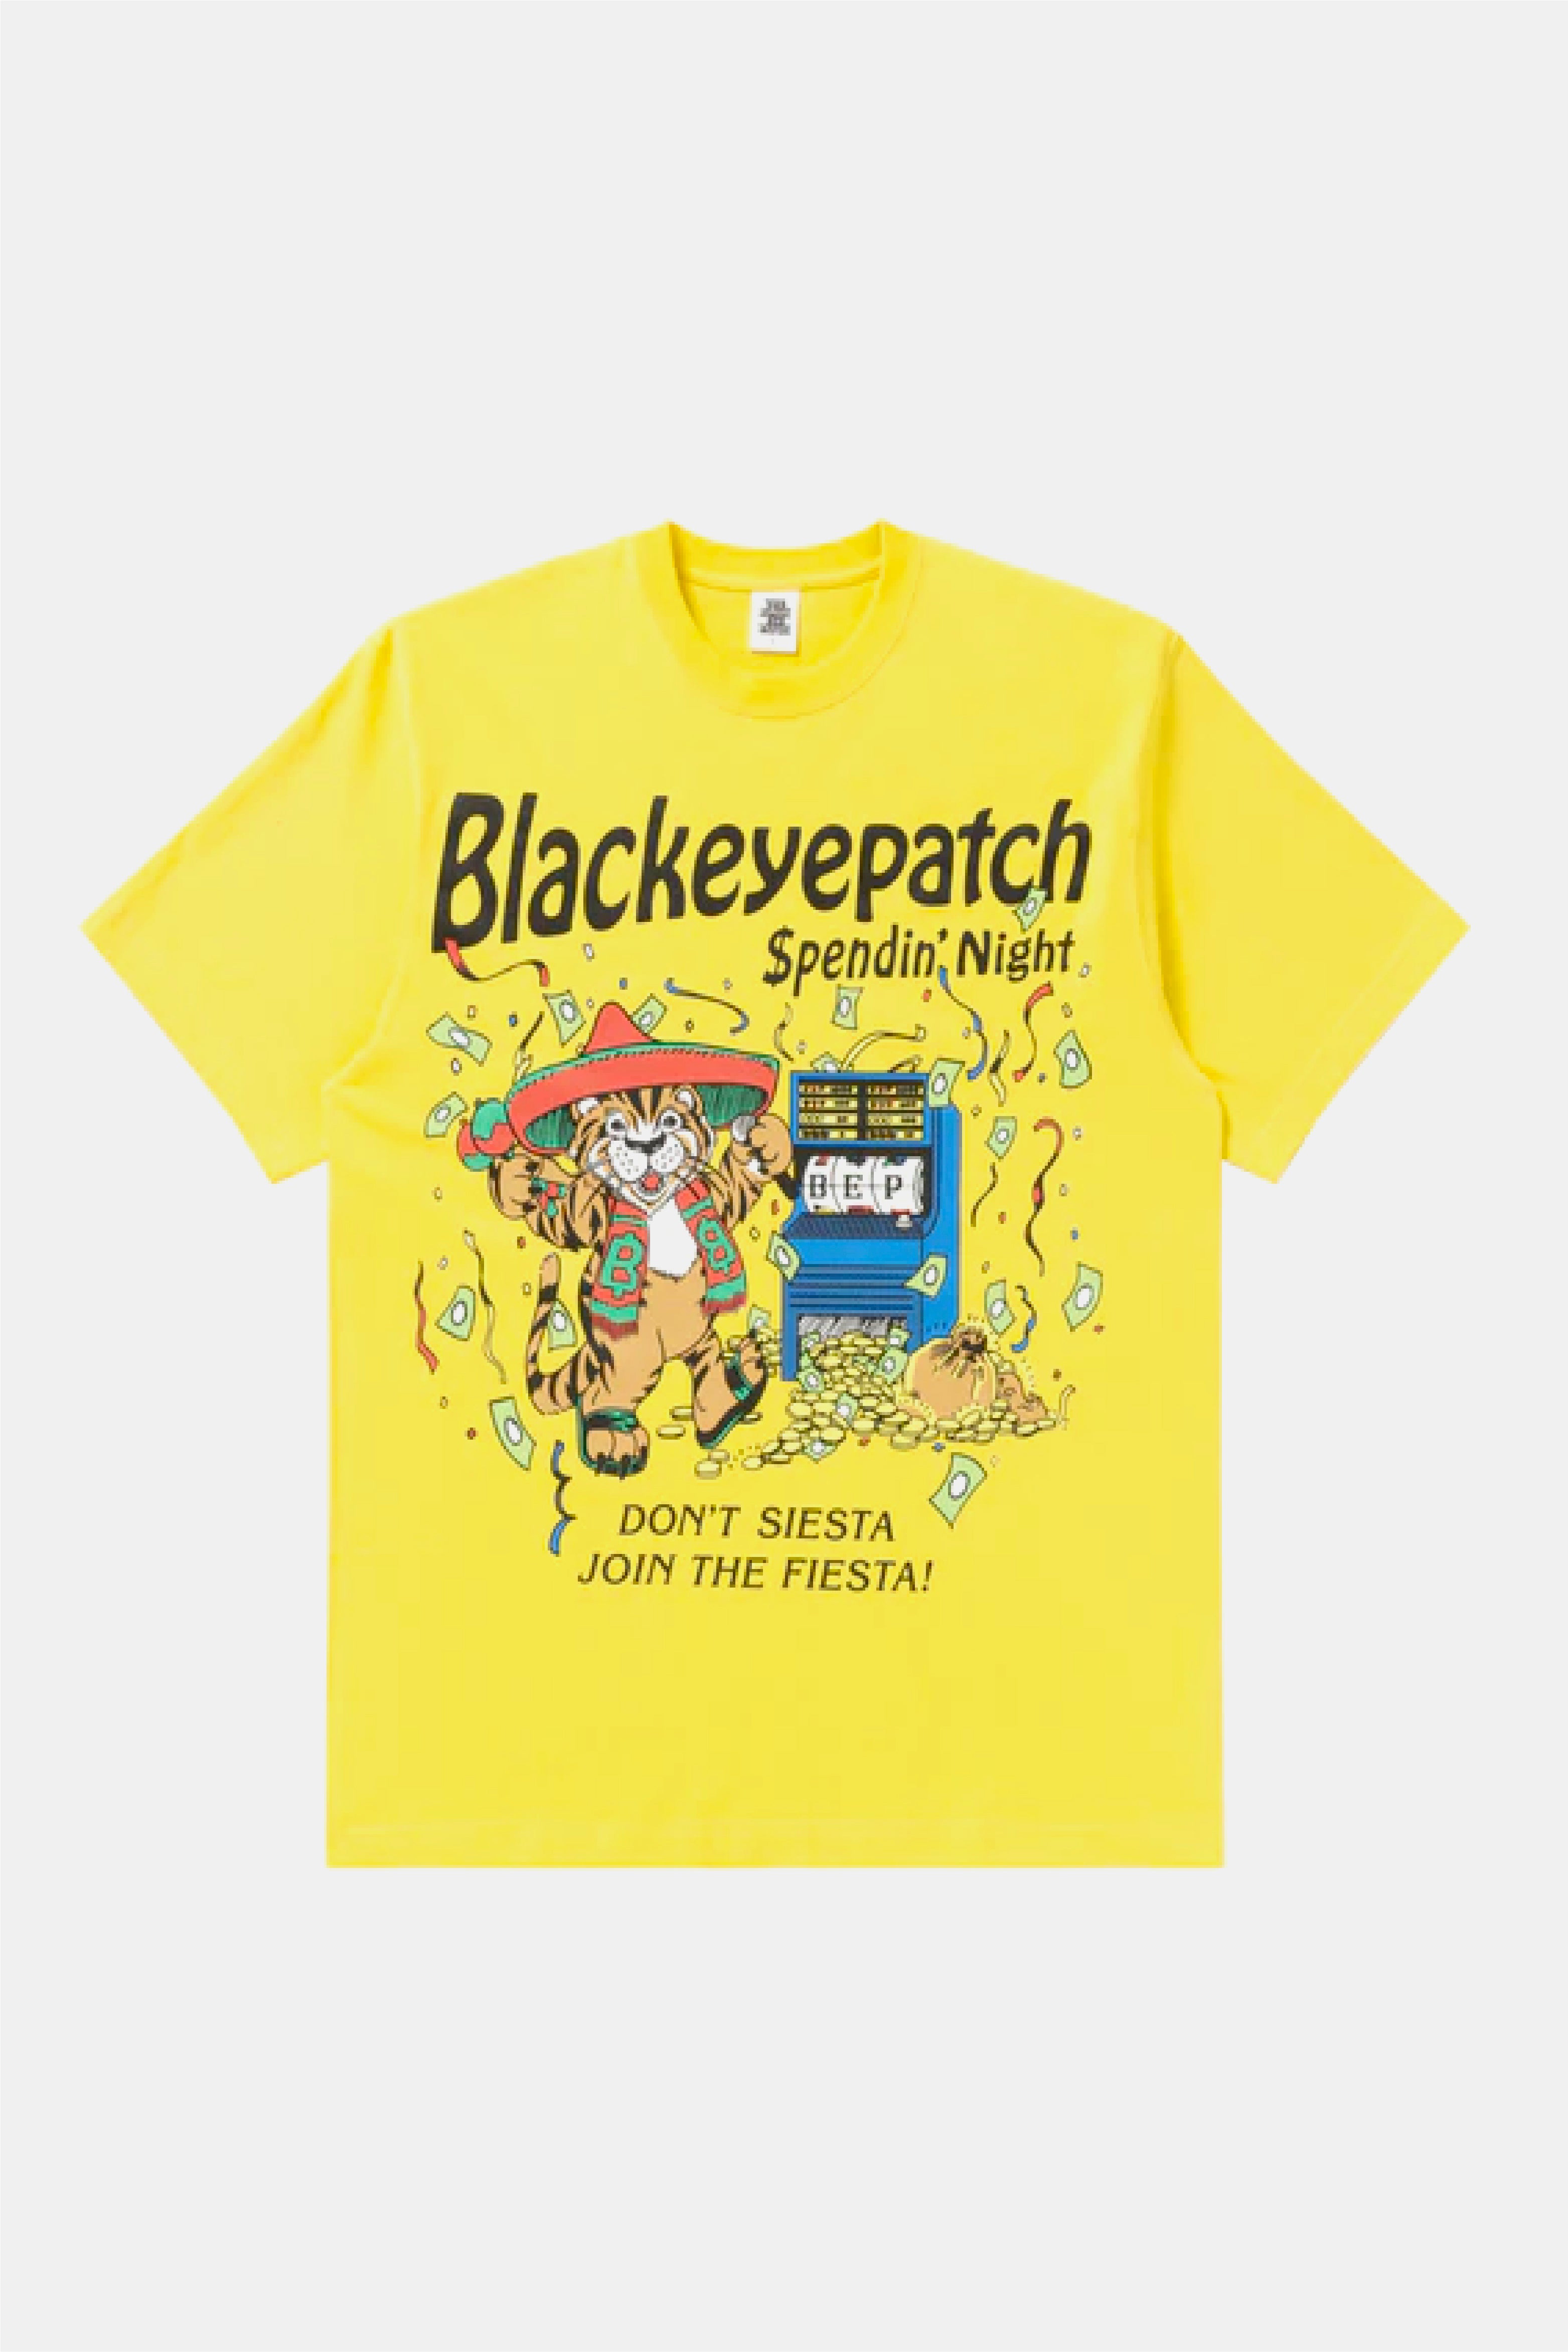 Selectshop FRAME - BLACKEYEPATCH Spendin' Night Tee T-Shirt Dubai